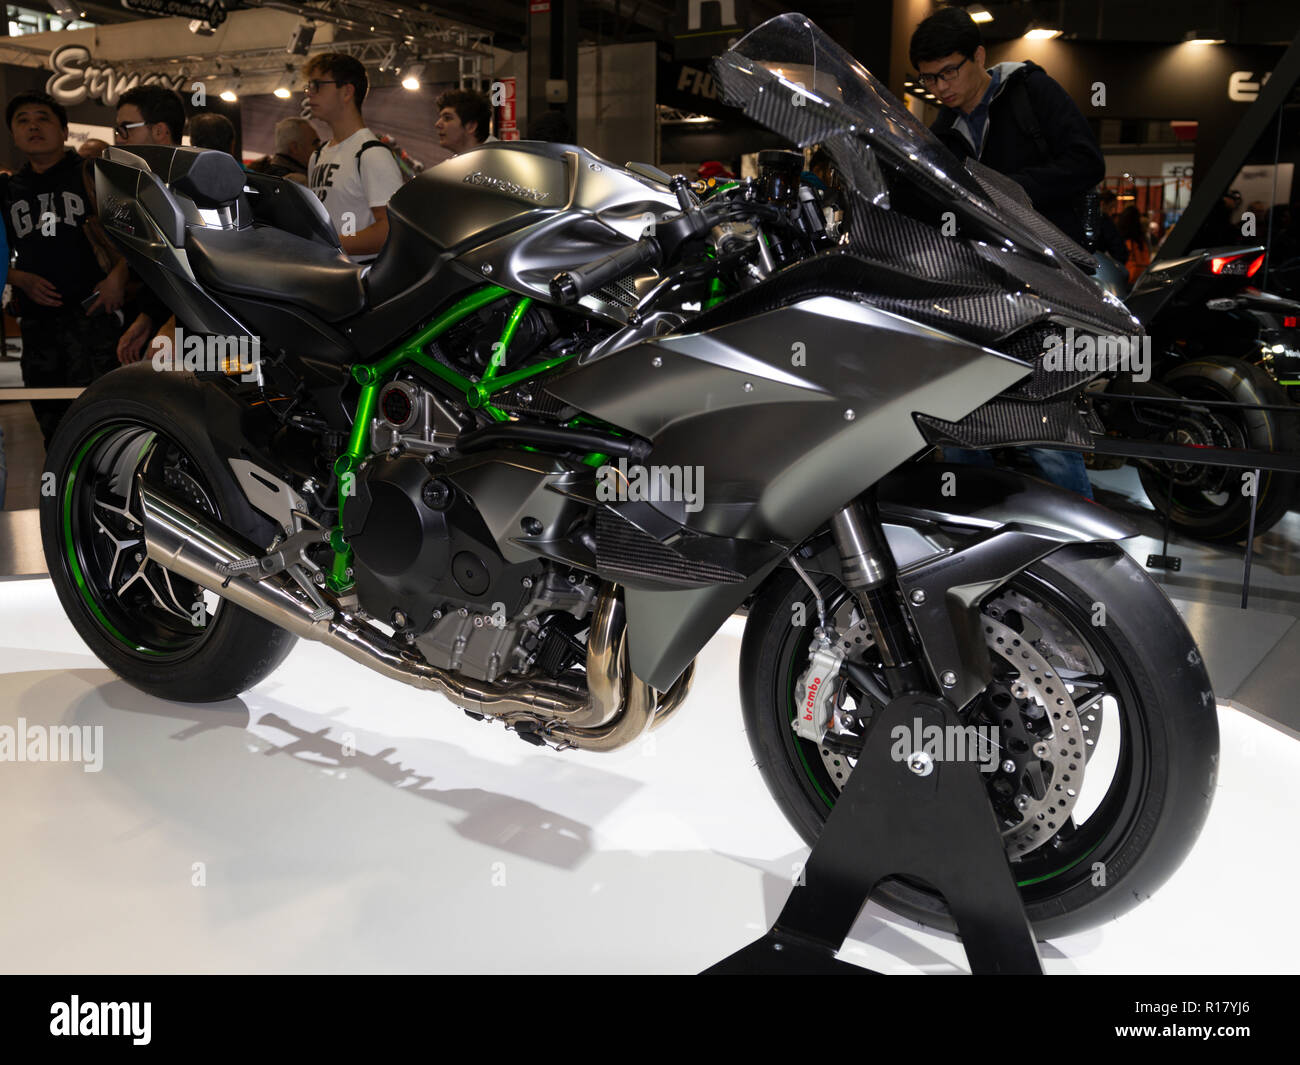 Kawasaki ninja h2r hi-res stock photography and images - Alamy